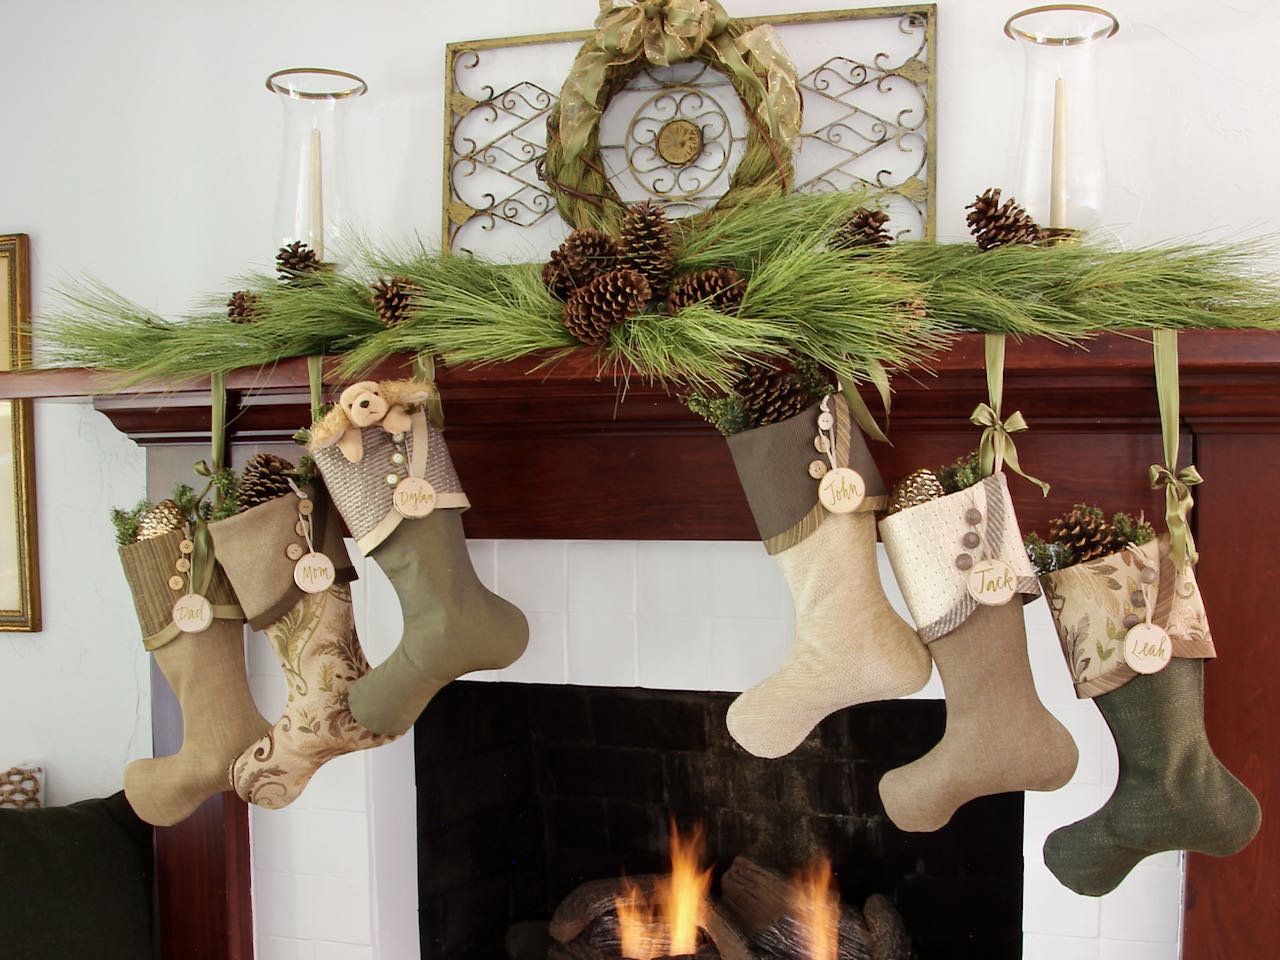 Mantel display with 6 woodland inspired Christmas stockings